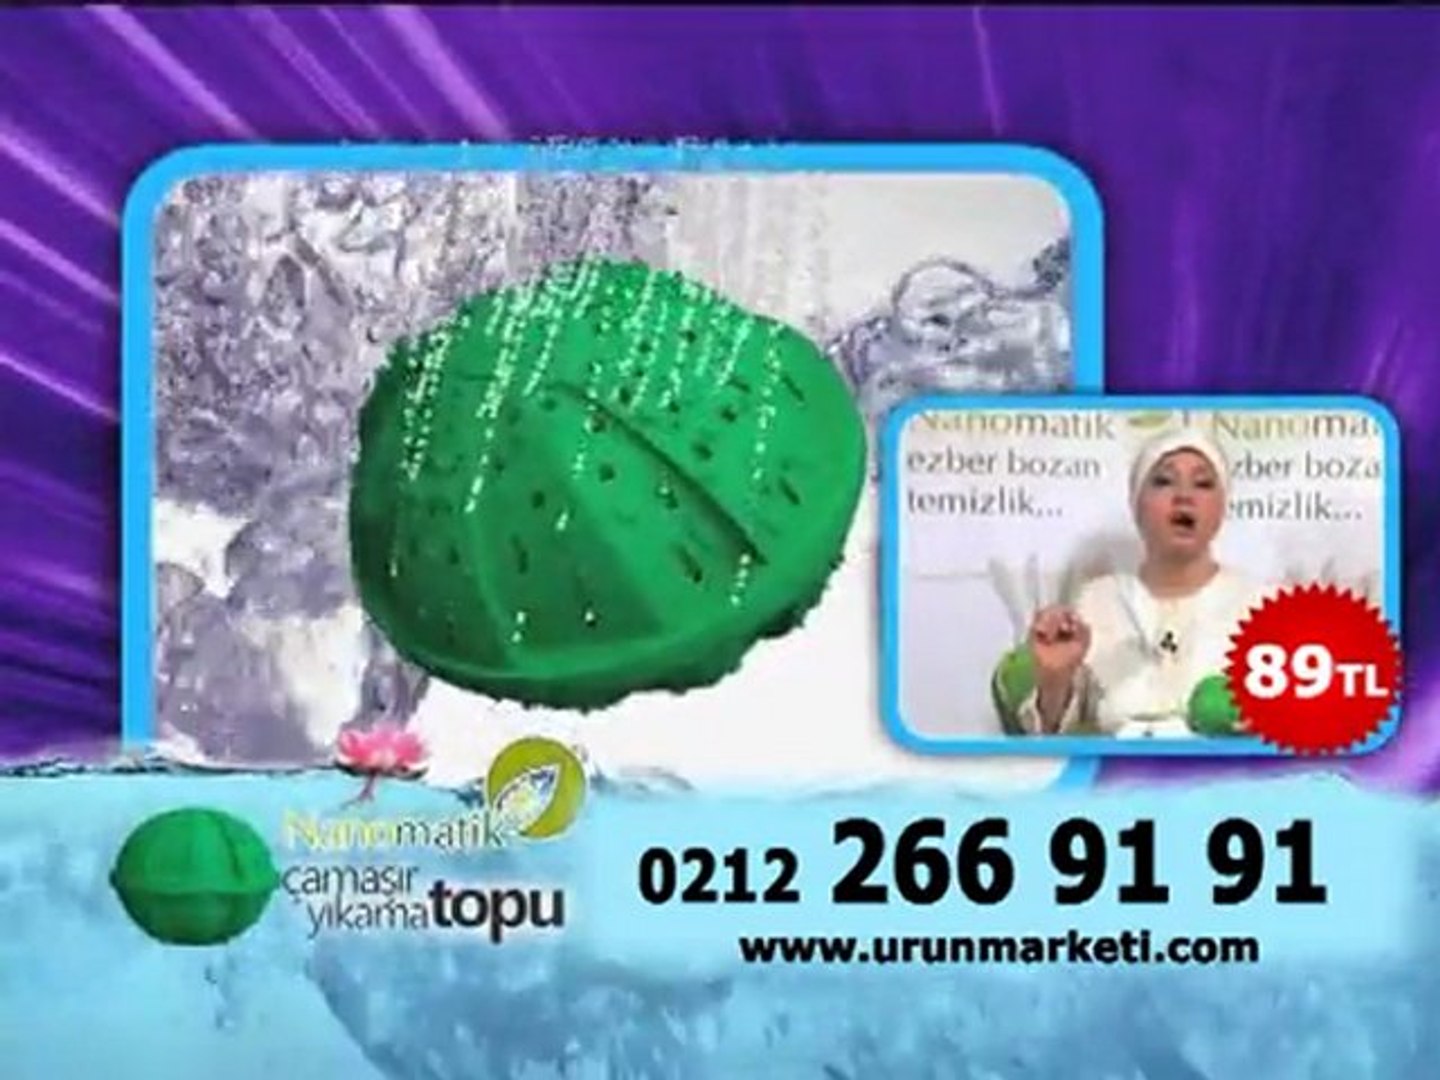 Nanomatik Çamaşır Yıkama Topu | Ürün Marketi - Dailymotion Video